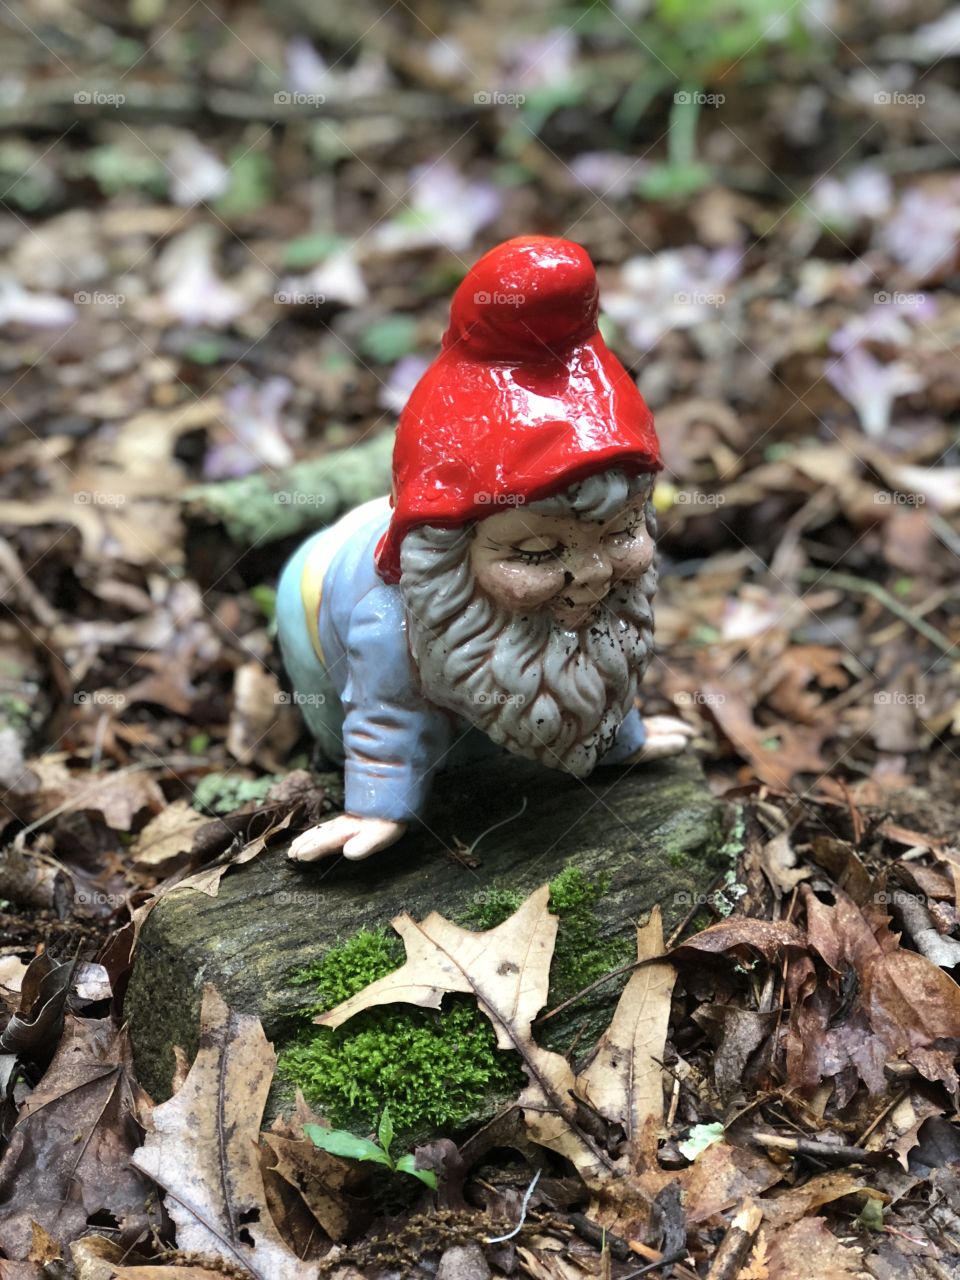 Kneeling garden gnome on mossy log in leaves